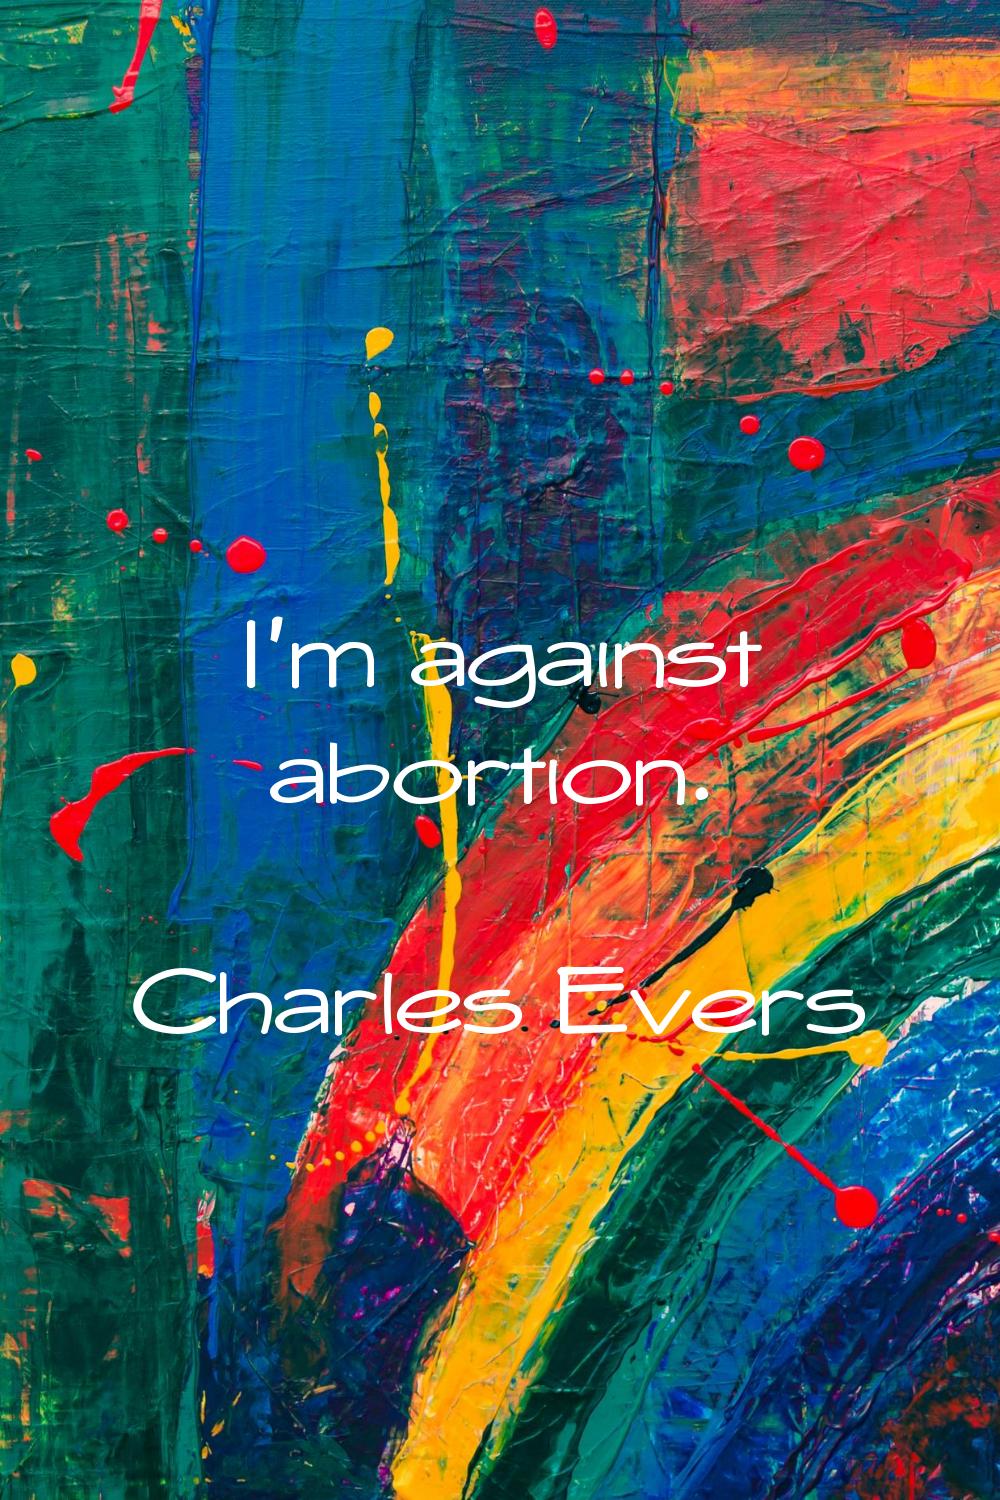 I'm against abortion.